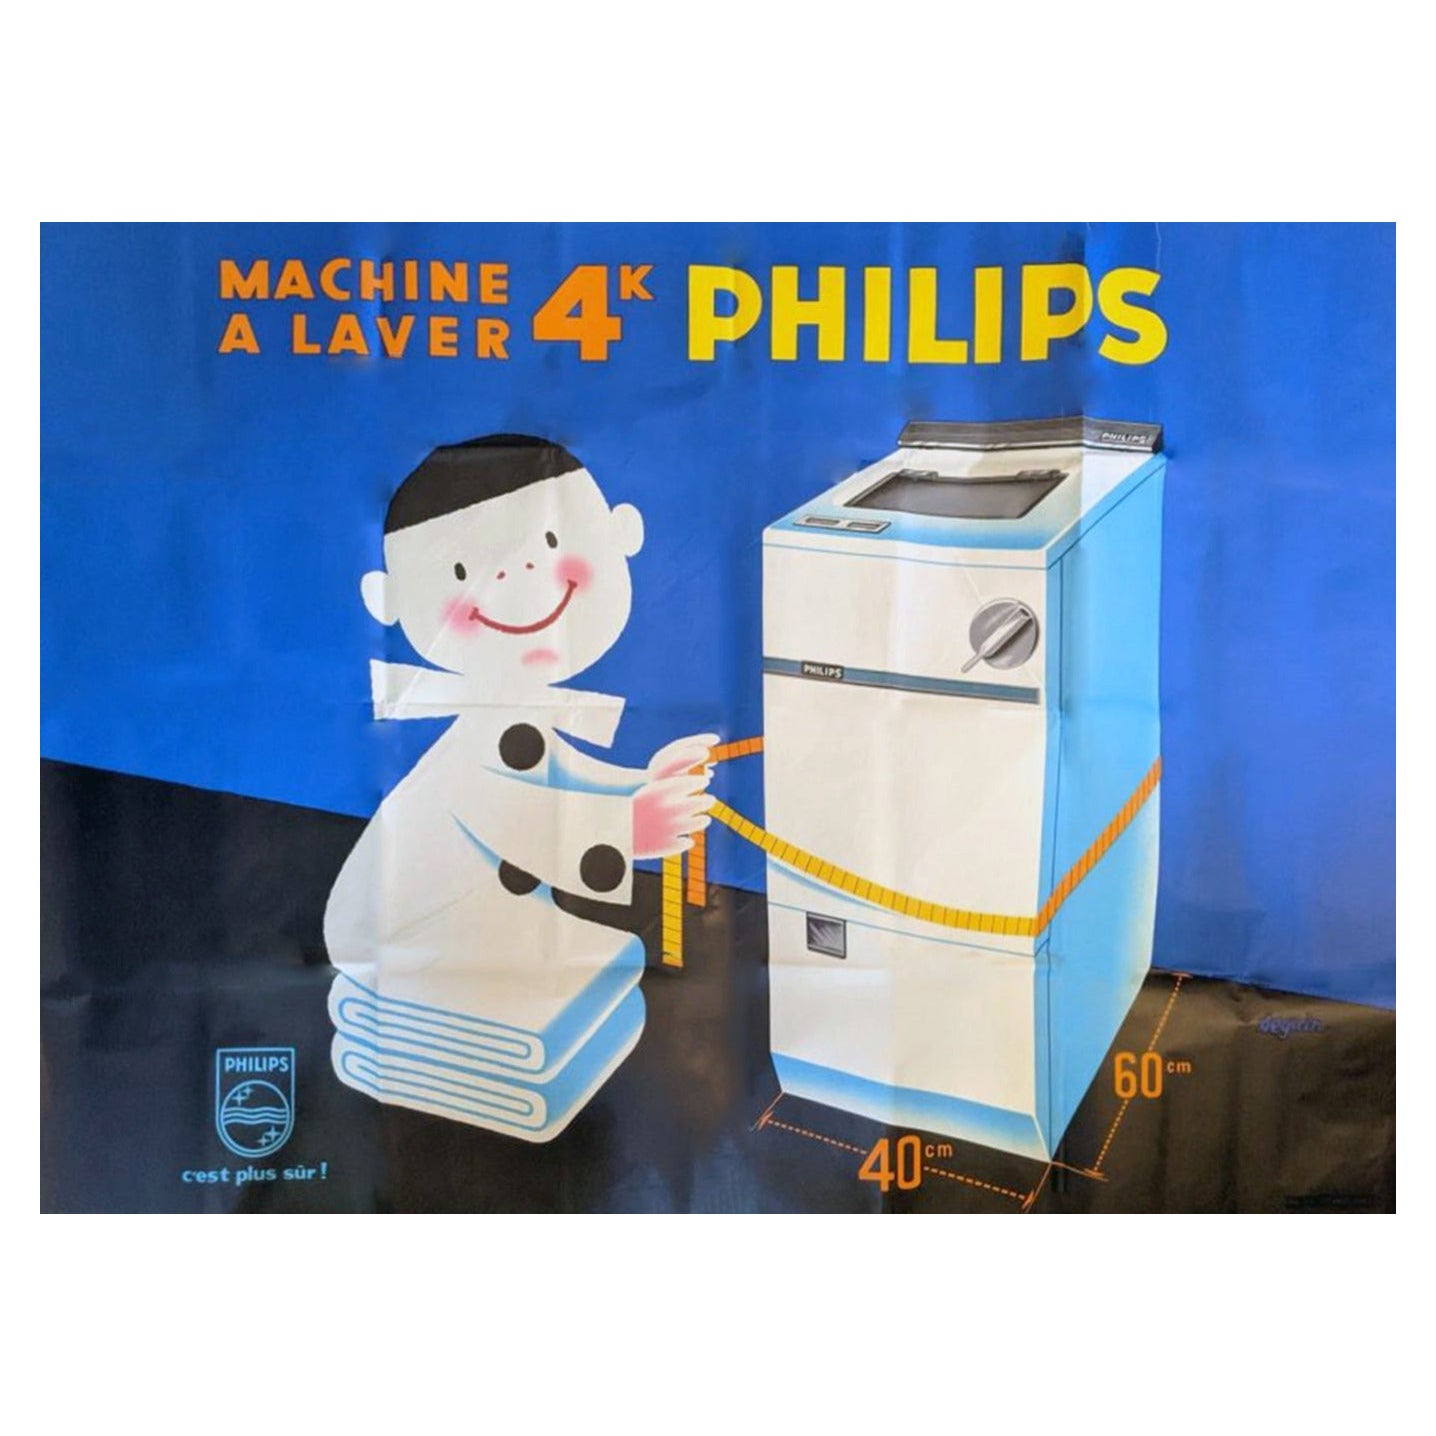 1960 Philips - Maschine A Laver Original Vintage Poster